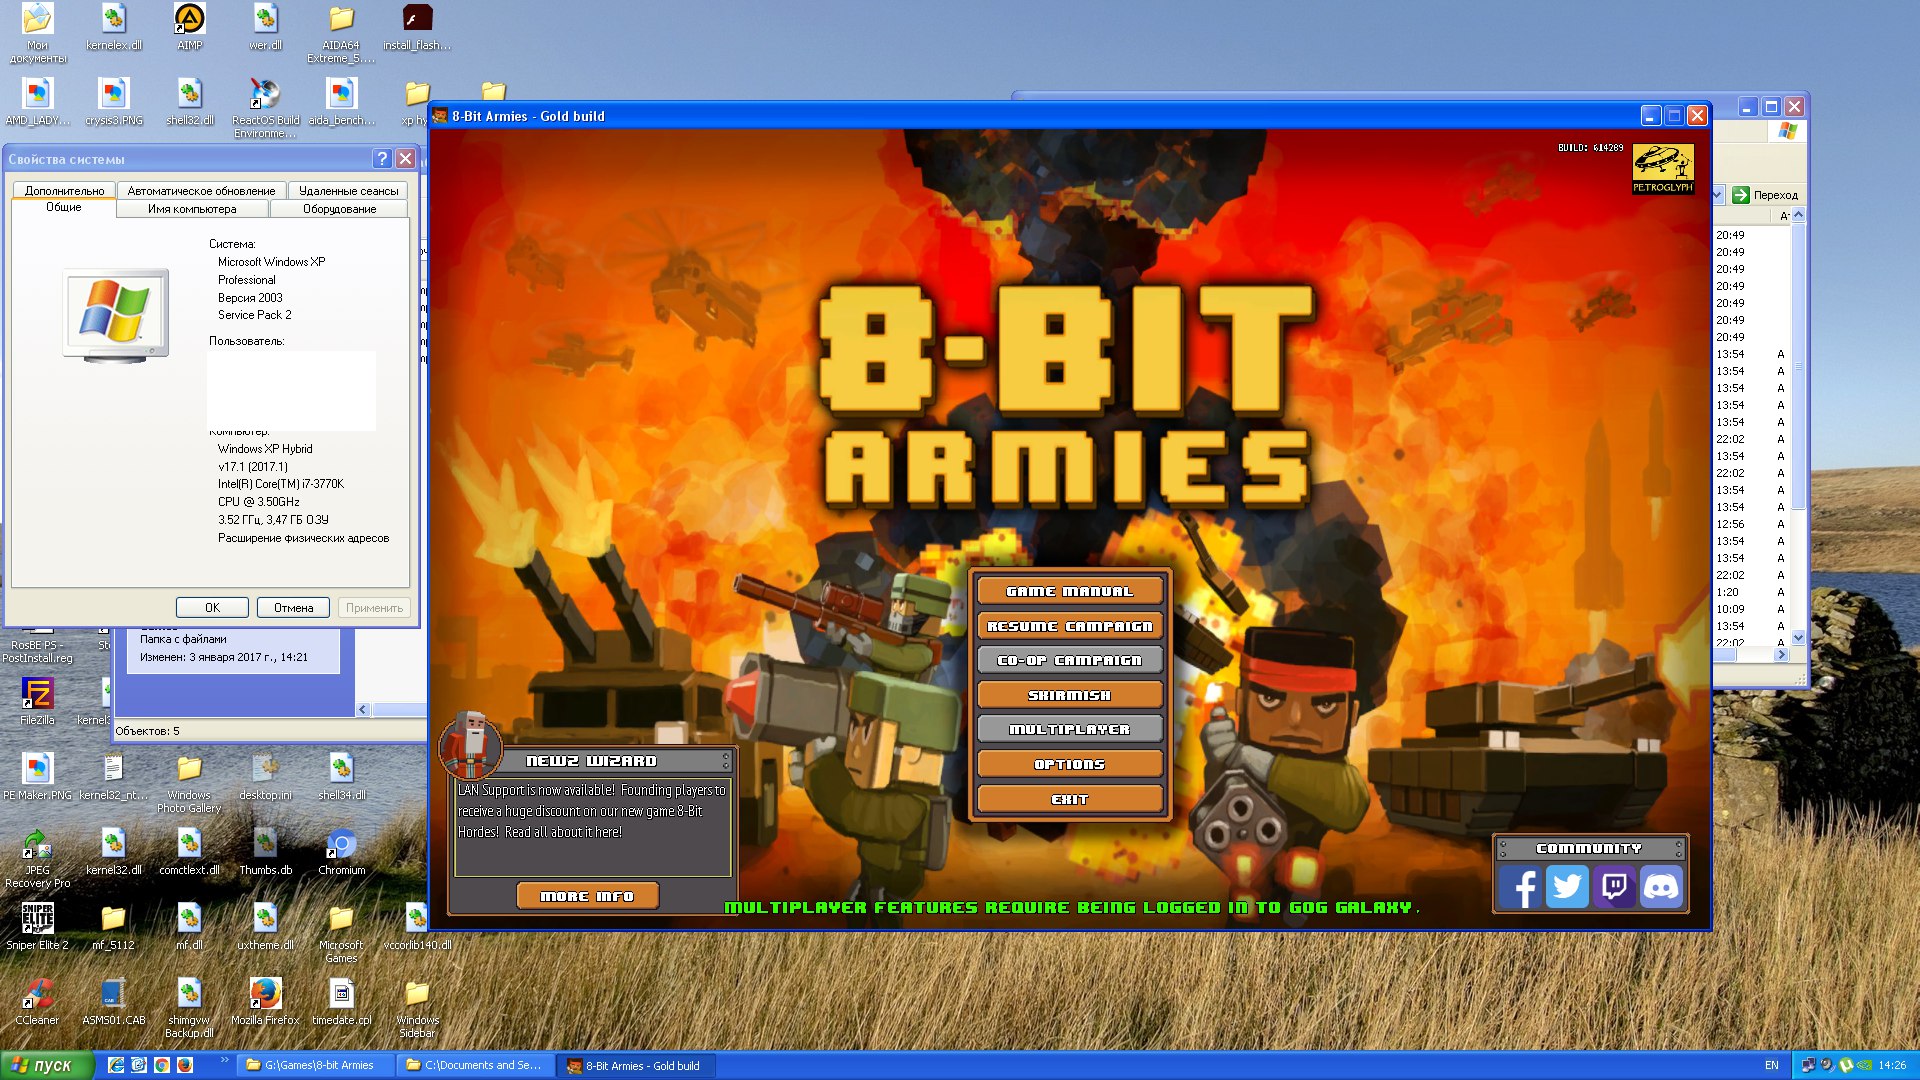 8-Bit Armies running on Server 2003.